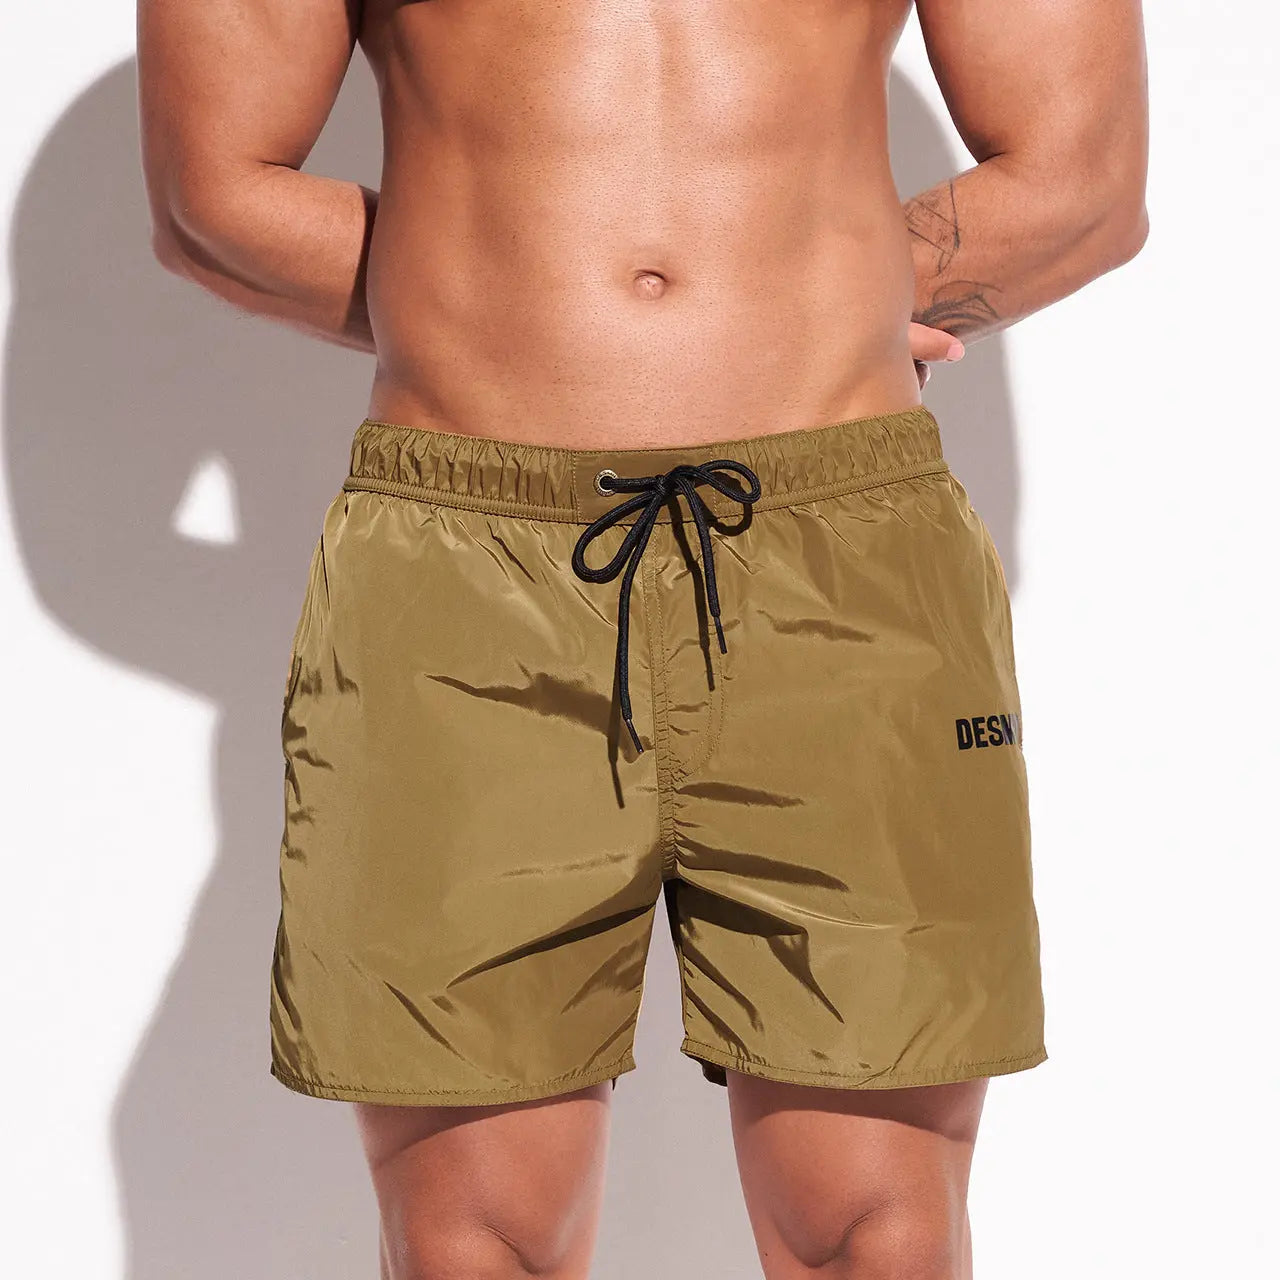 DESMIIT Beach Pants Men's Loose Quick-Drying Sports DESMIIT